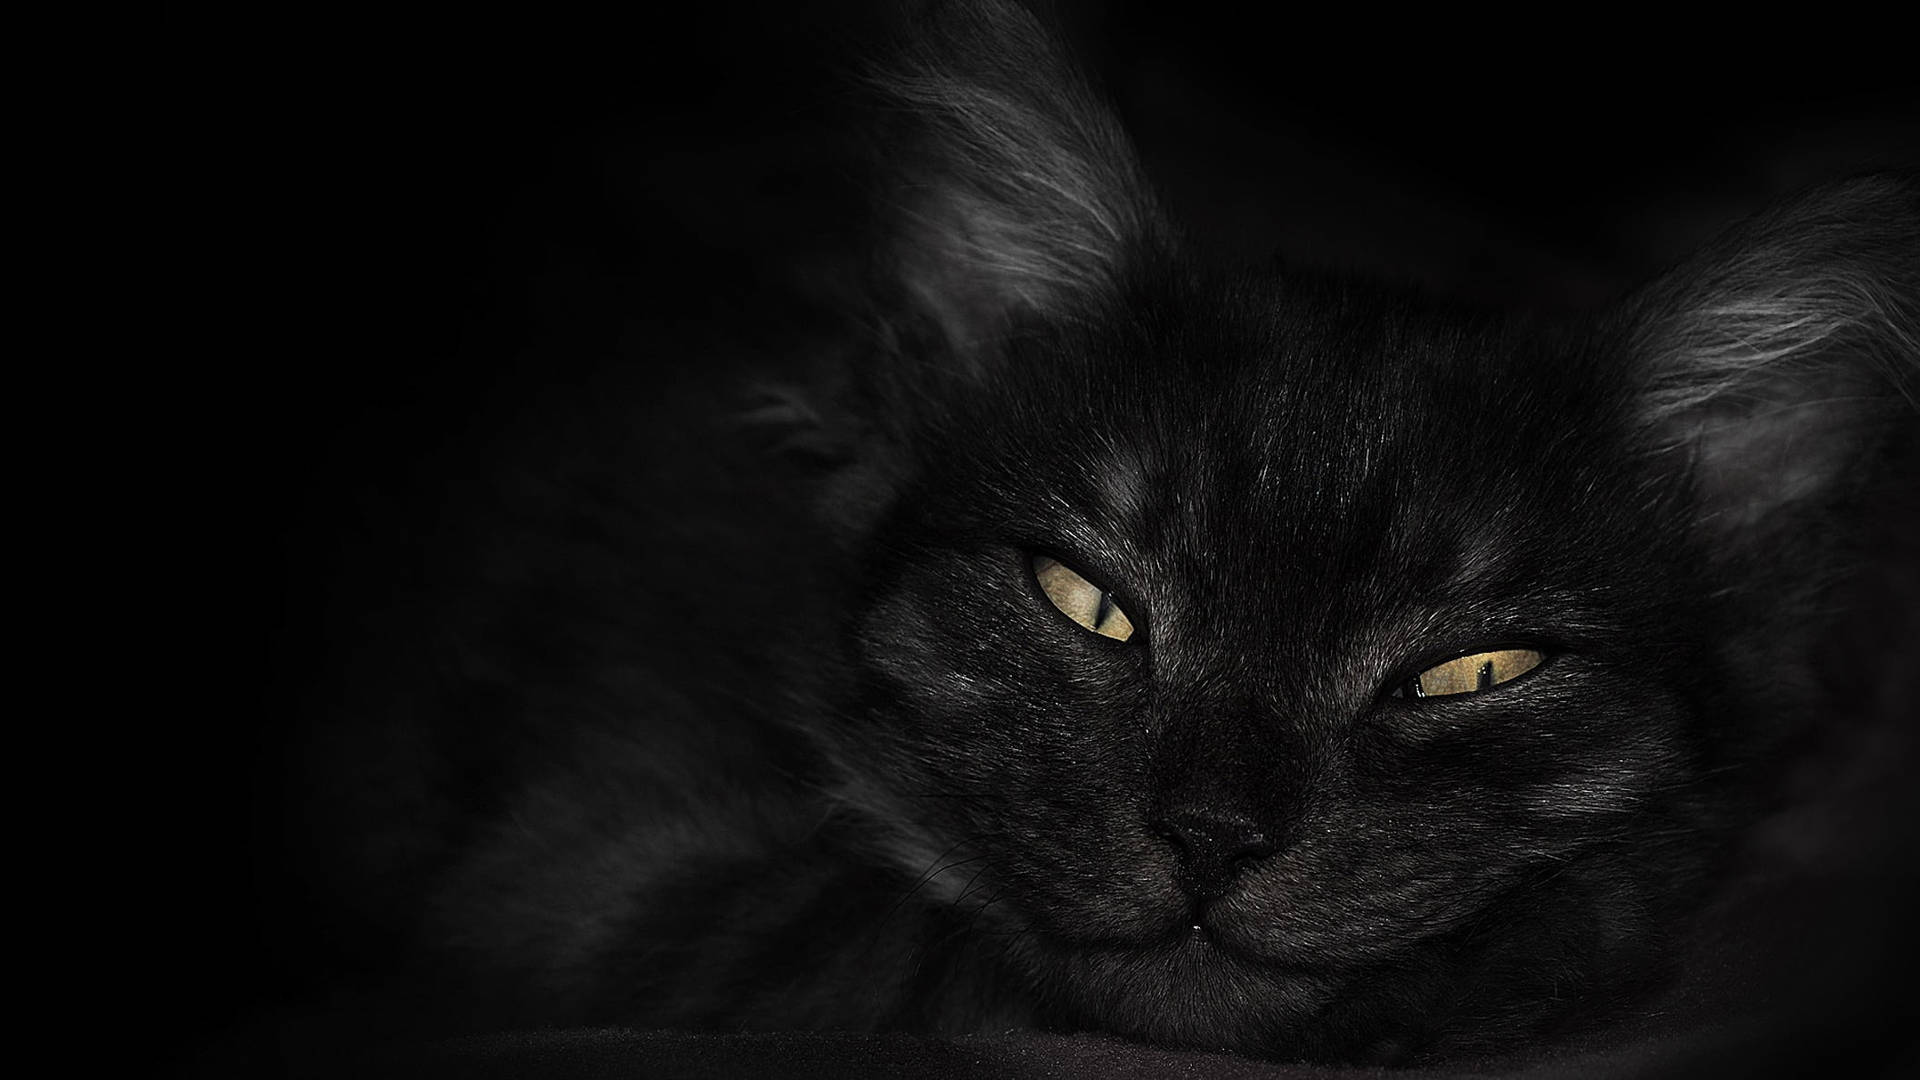 Dark Laptop Black Cat With Yellow Eyes Background